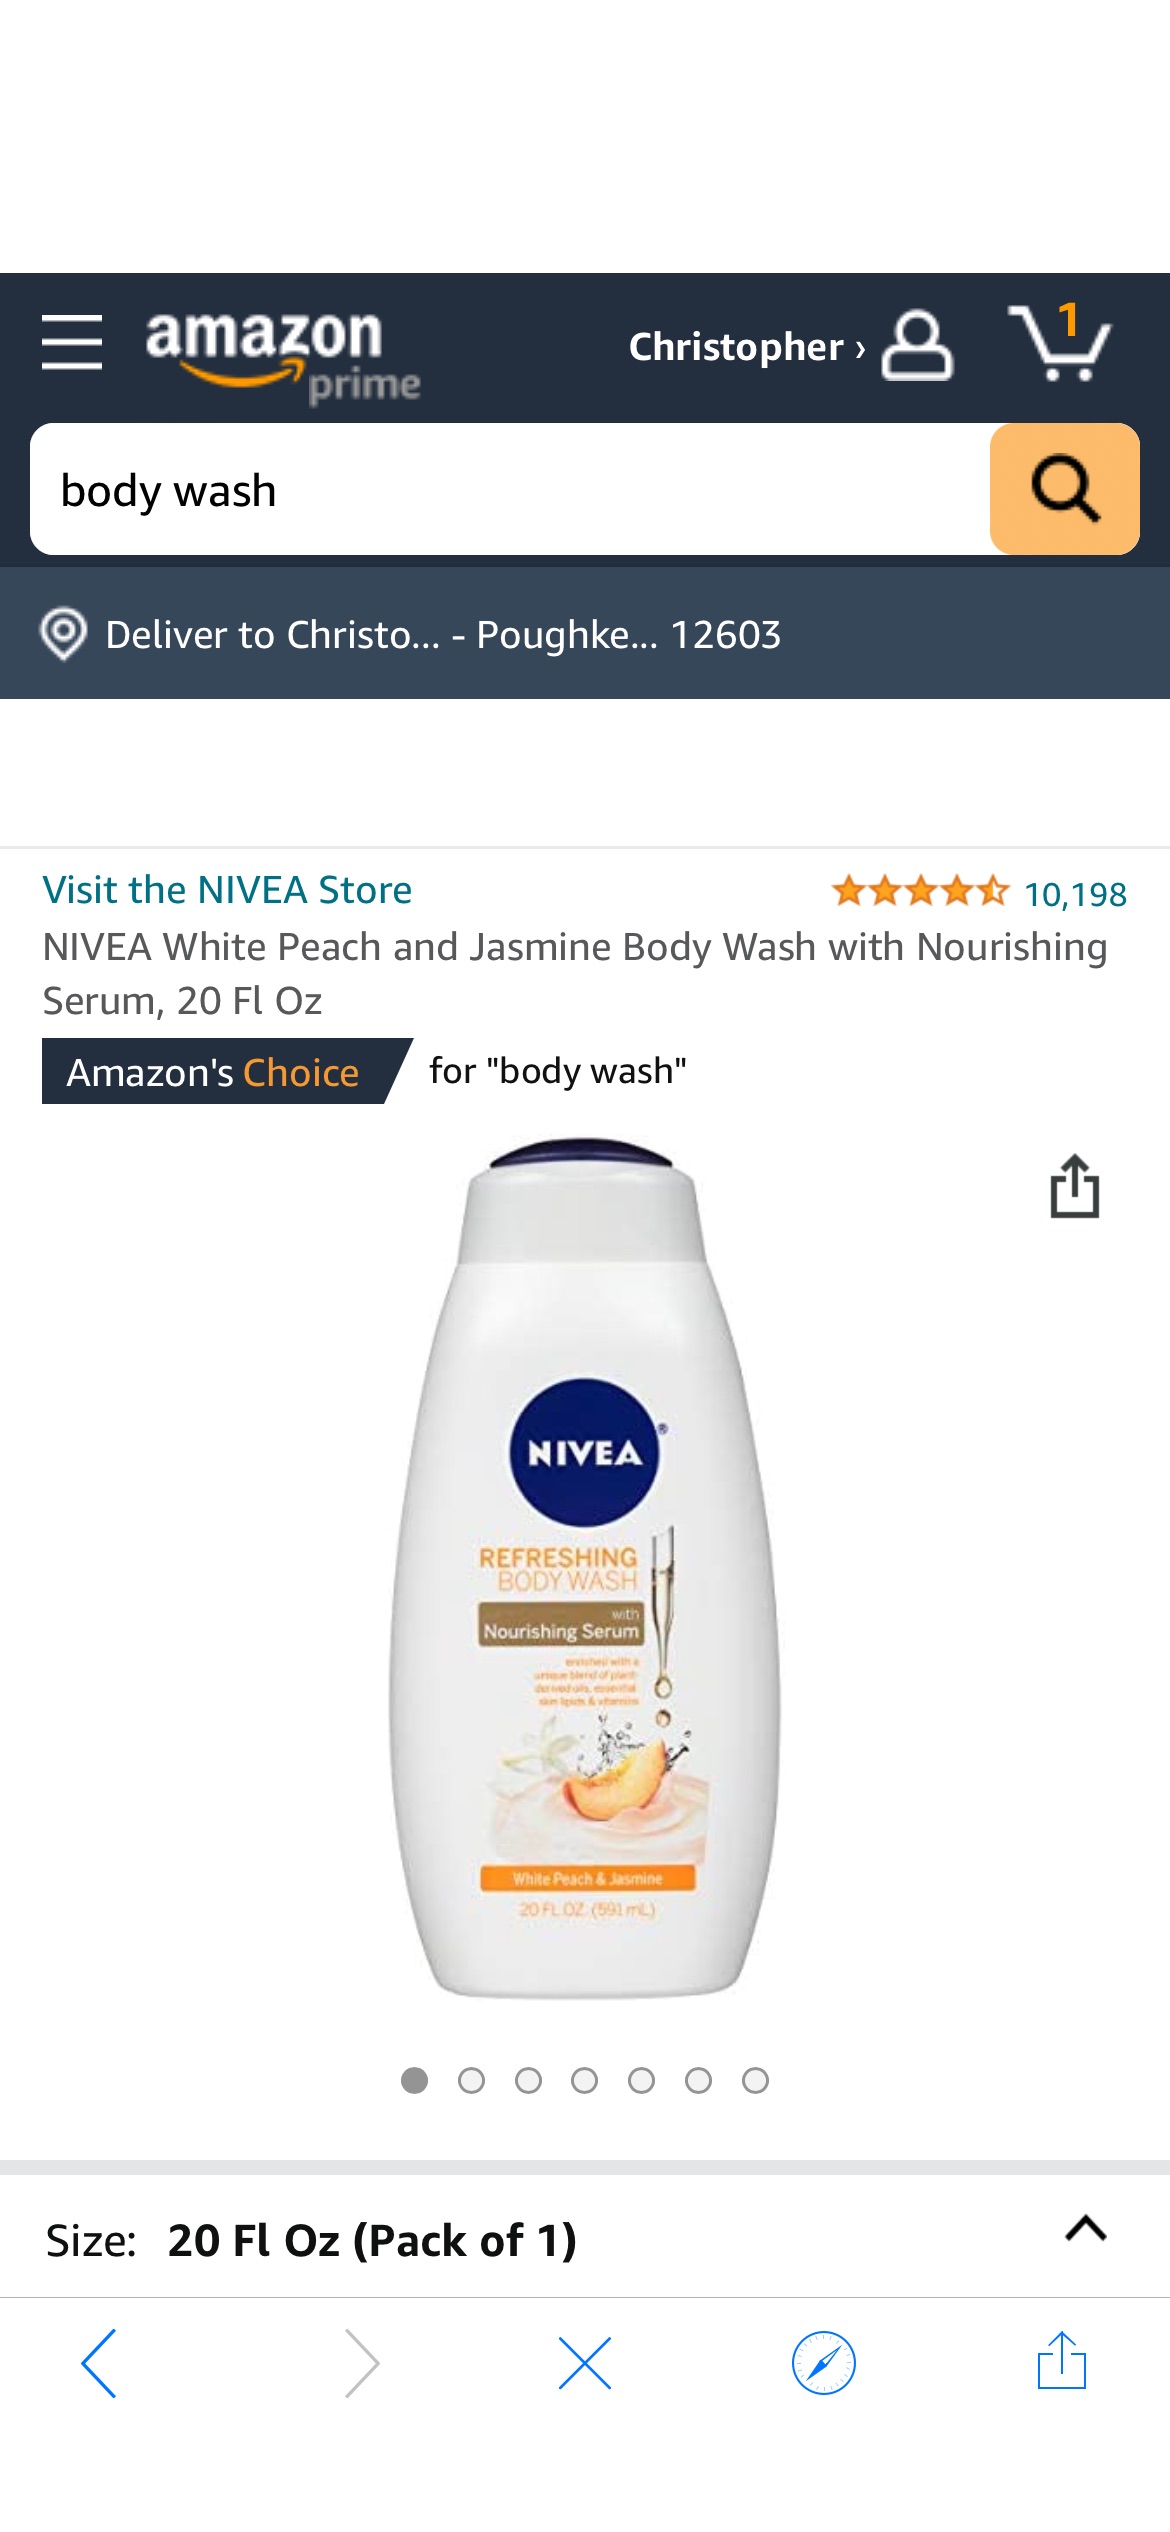 Amazon.com : NIVEA White Peach and Jasmine Body Wash with Nourishing Serum, 20 Fl Oz : Beauty & Personal Care沐浴露